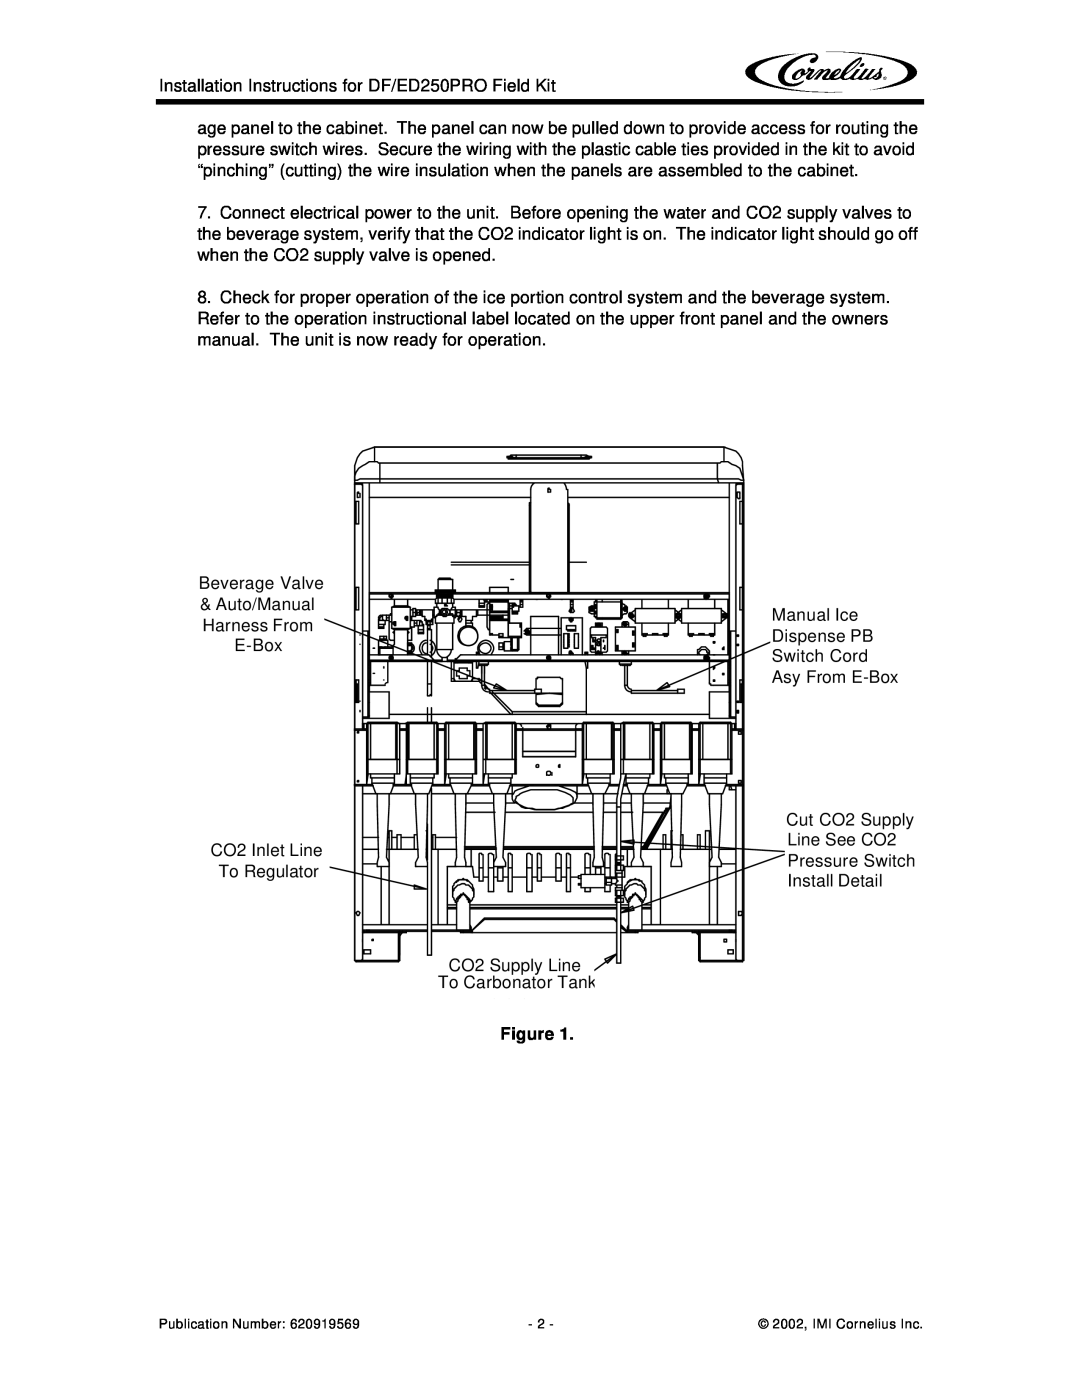 Cornelius DF/ED250PRO Beverage Valve, Auto/Manual, Harness From E-Box, CO2 INLET, Line To Regulator, CO2 SUPPLY 